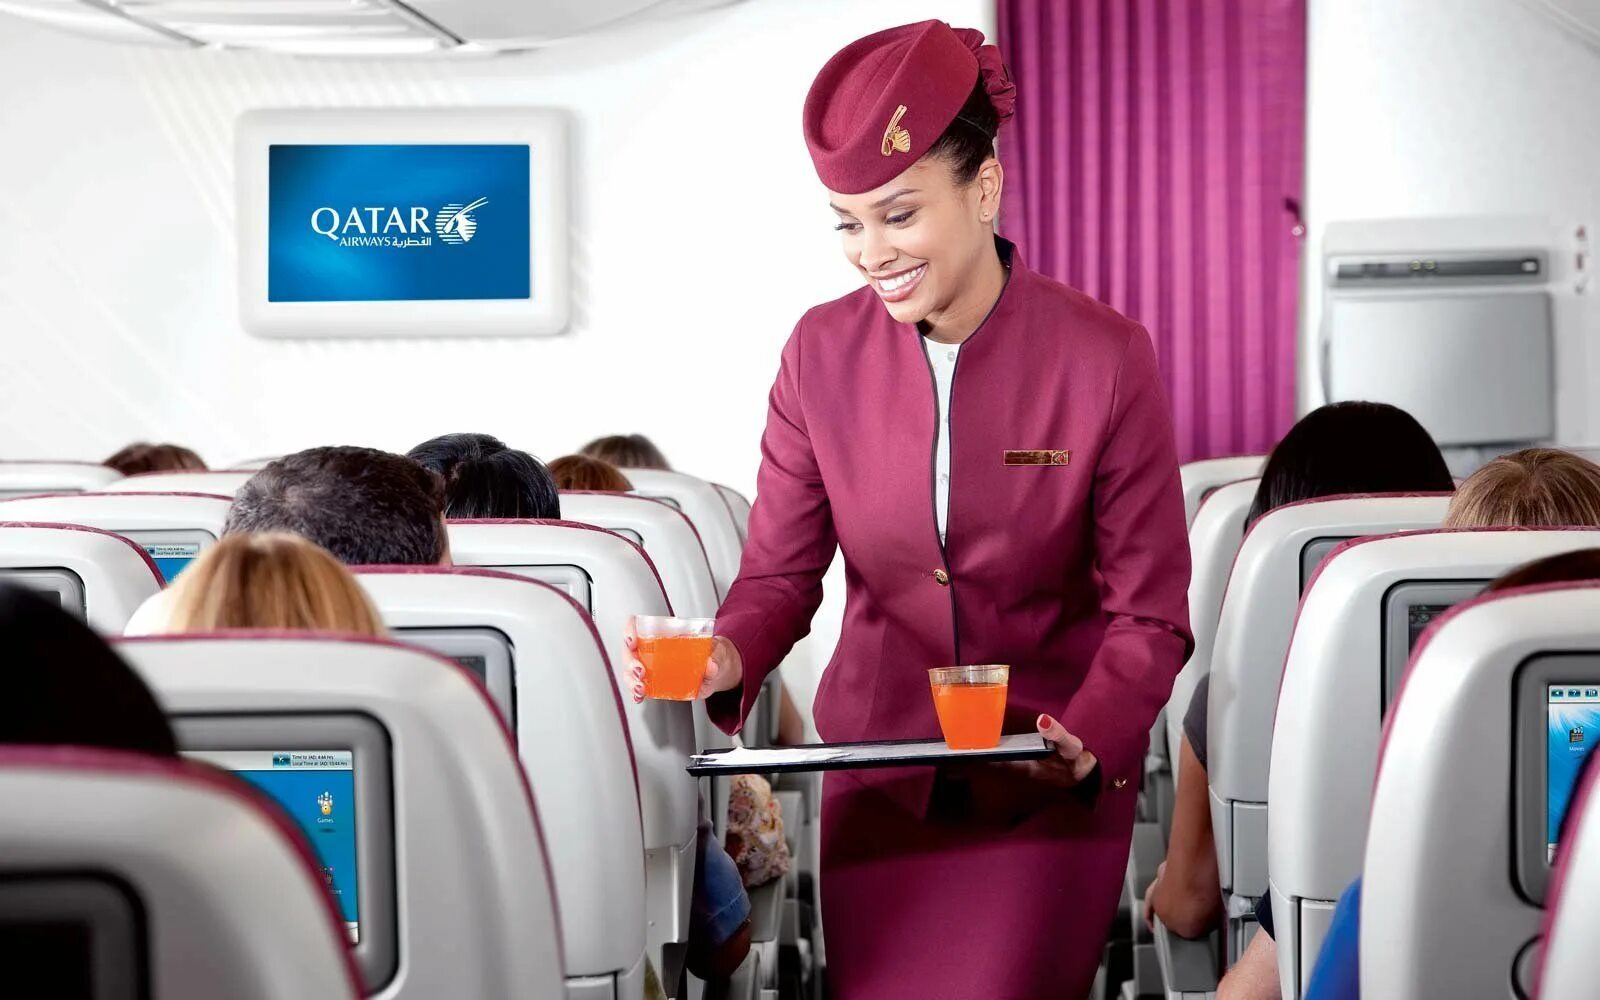 Стюардессы Катар Эйрлайнс. Катар авиалинии бортпроводники. Катар Эйрвейс стюардесса. Qatar Airways стюардессы.